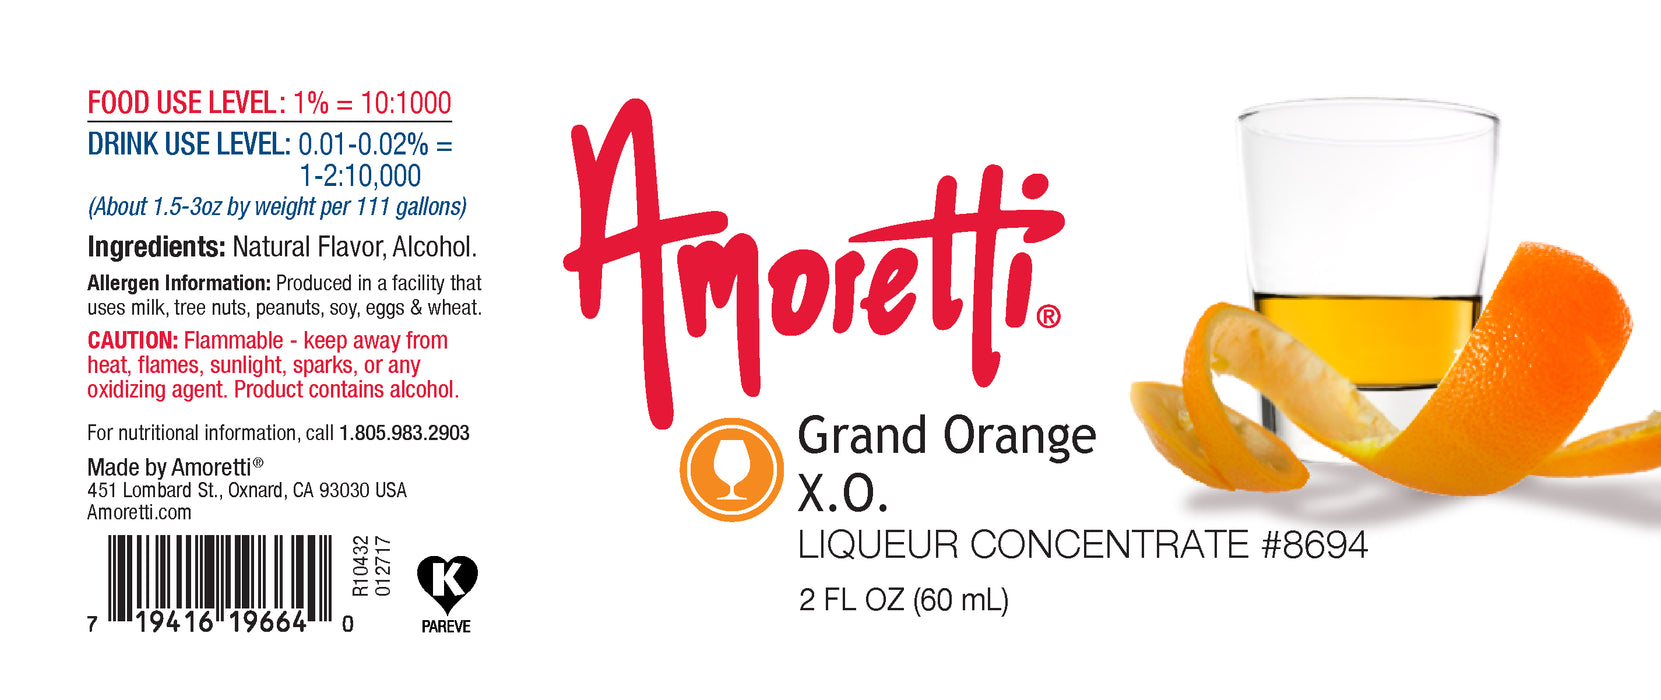 Grand Orange XO Liqueur Concentrate